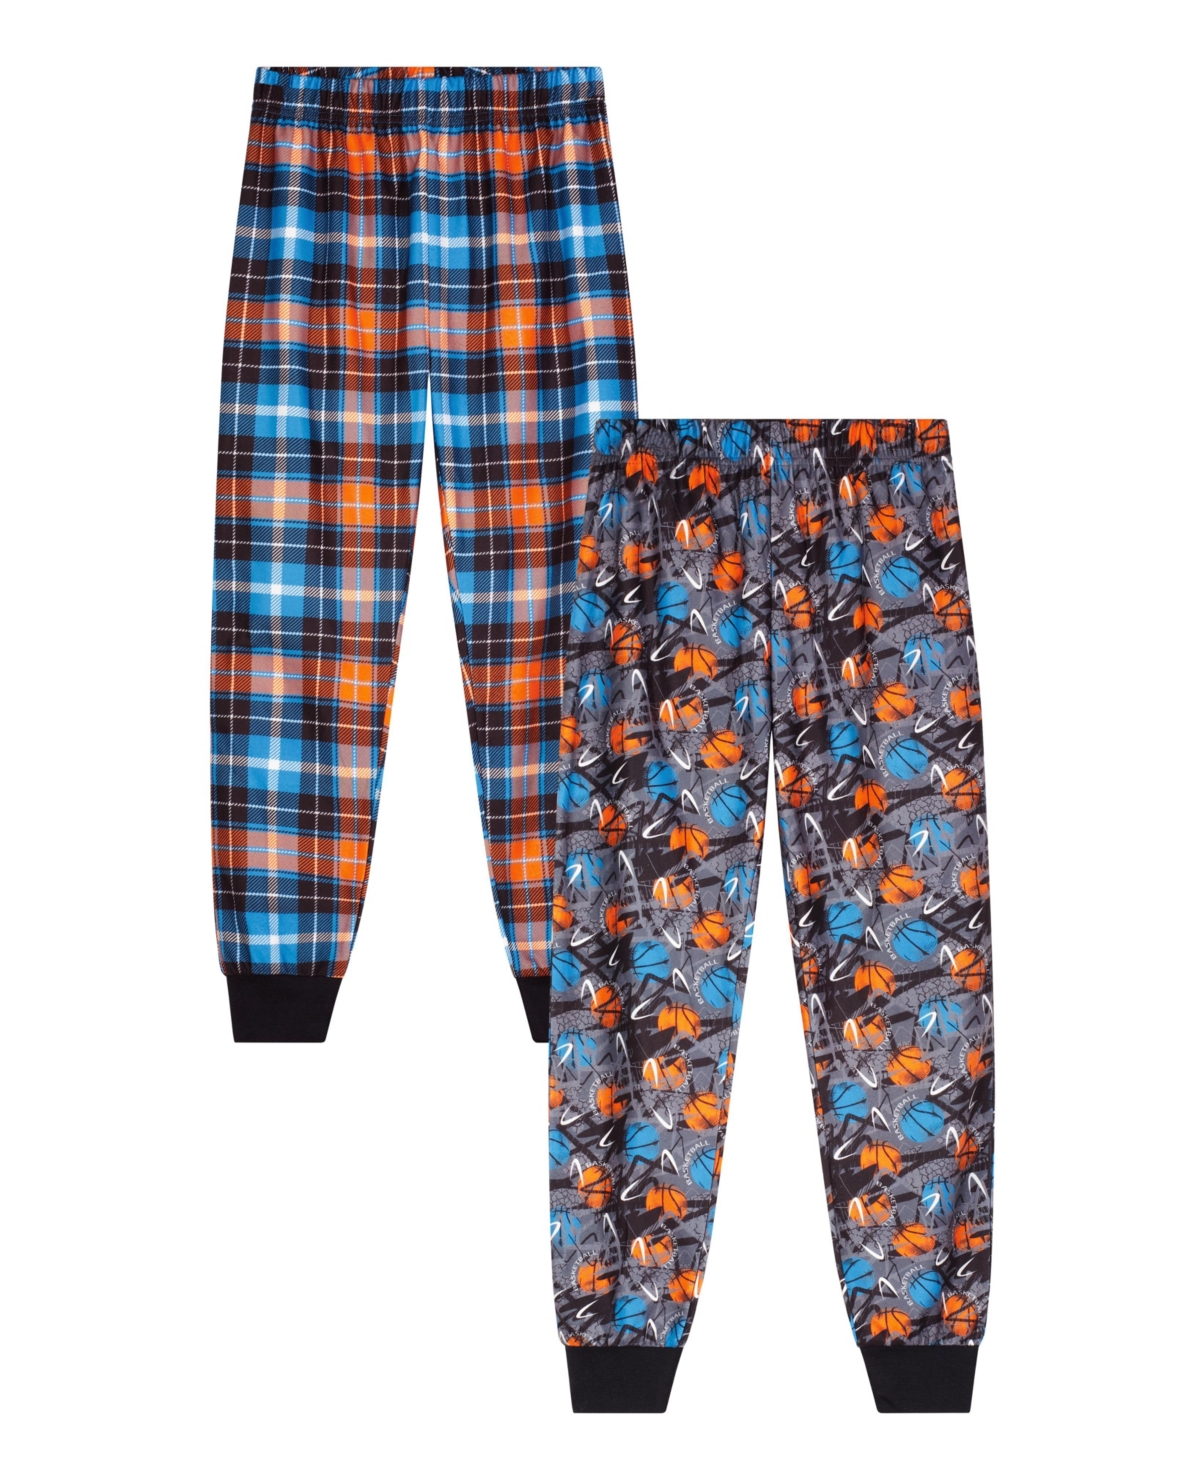 Max & Olivia Big Boys 2 Pack Pajama Pants Set, 2 Pieces In Black